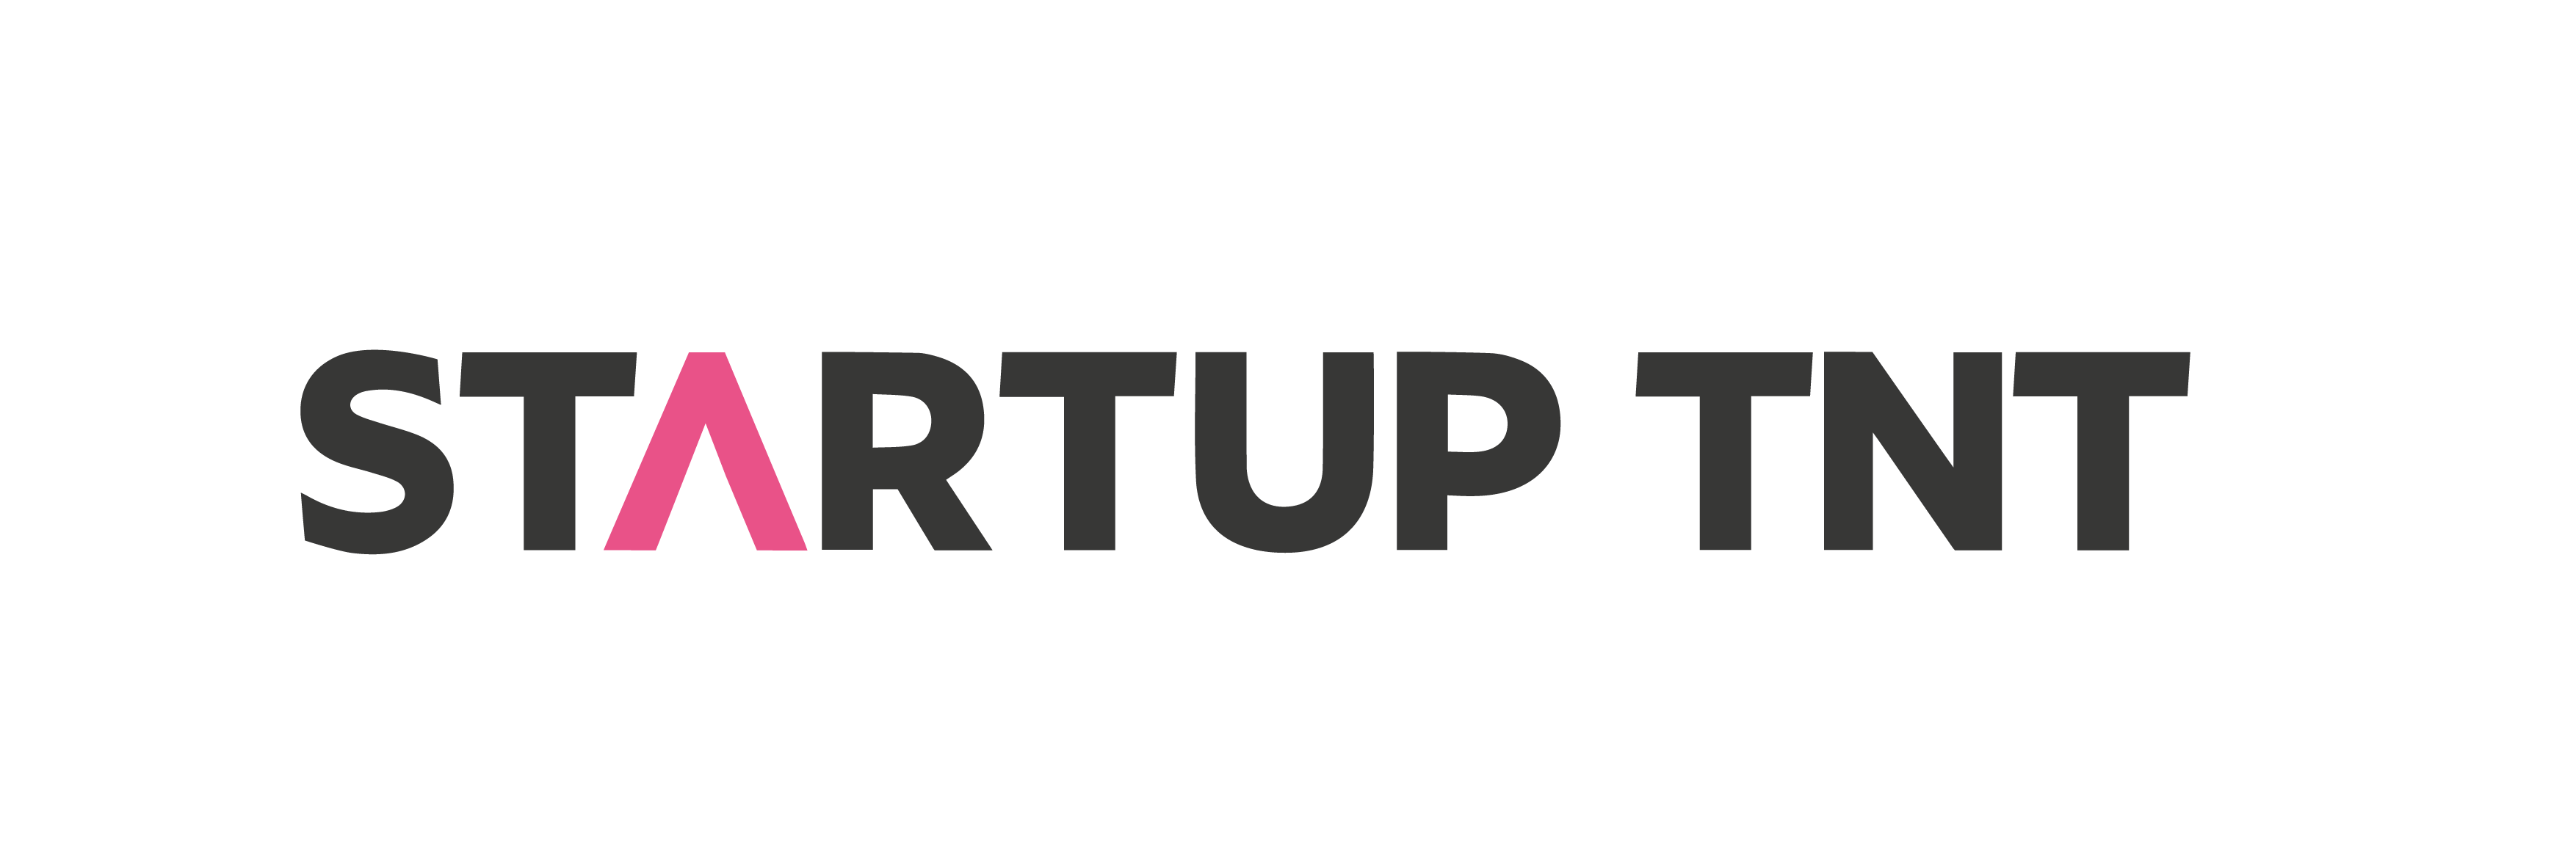 Startup TNT